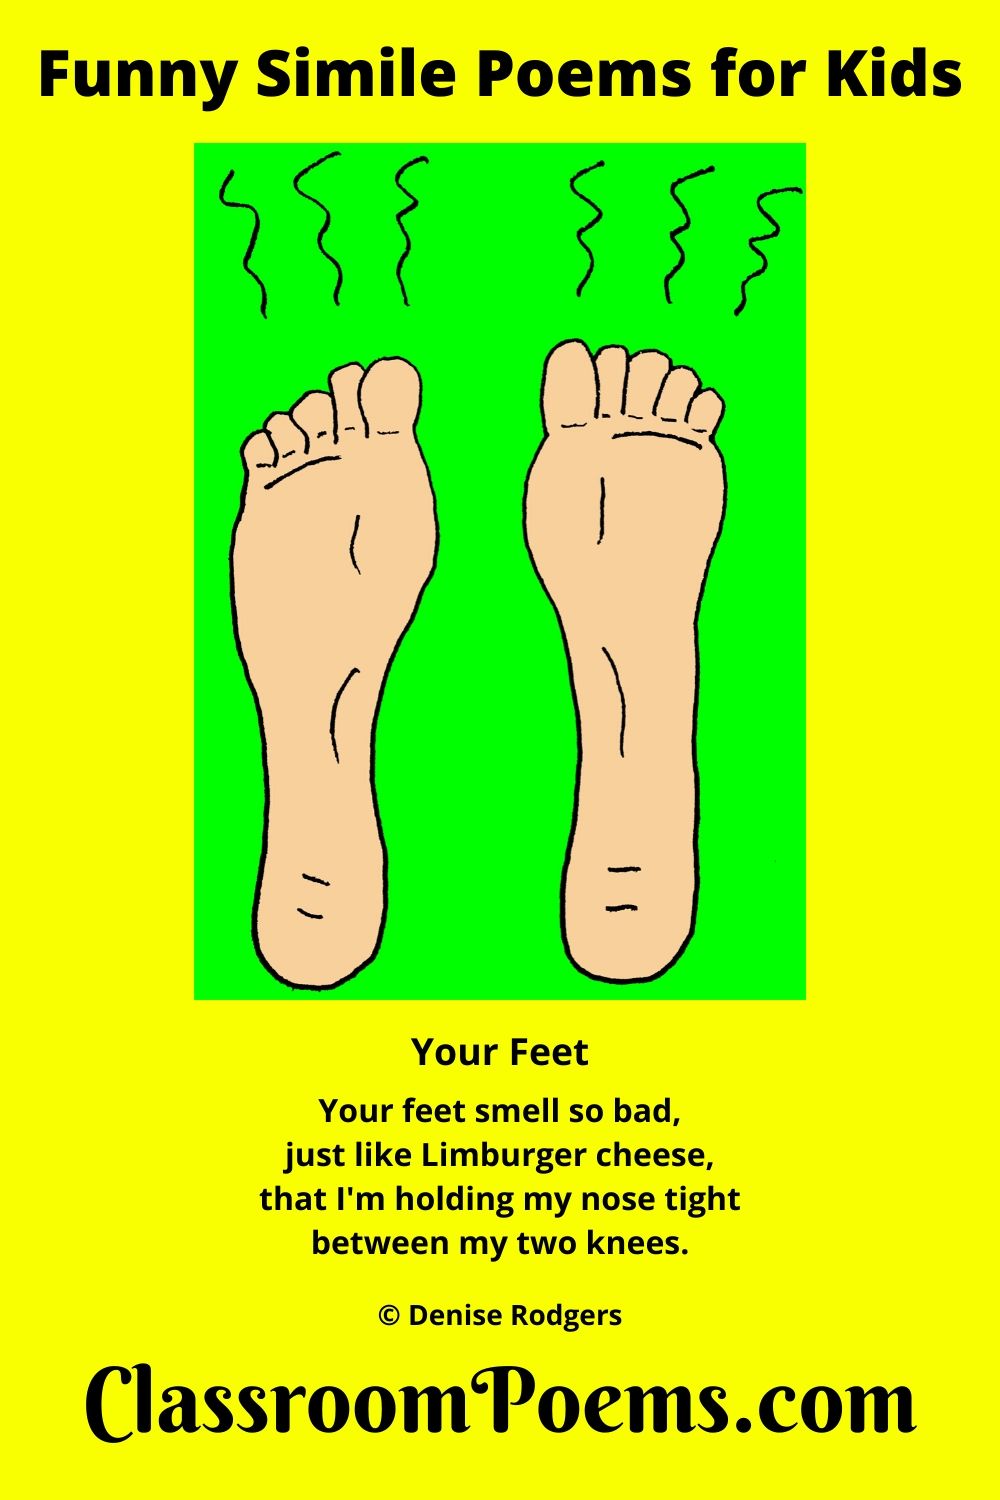 Stinky feet. Stinky feet simile poem for kids.